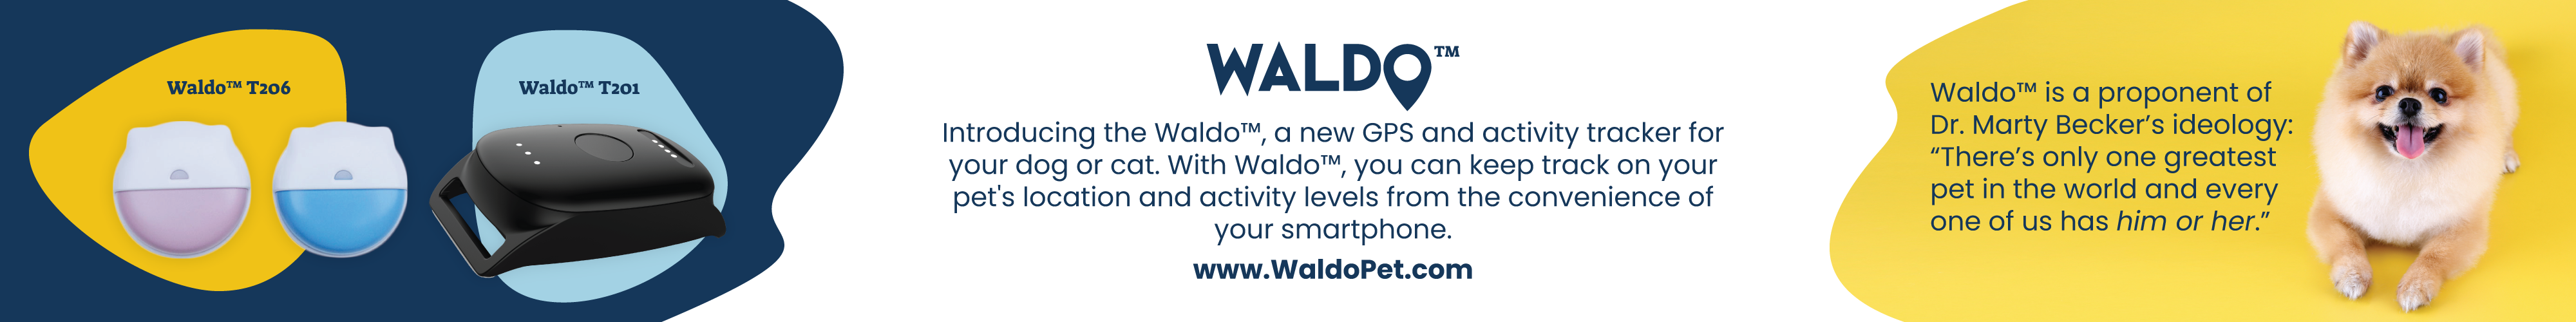 Waldo Pet GPS Tracker Advertisement